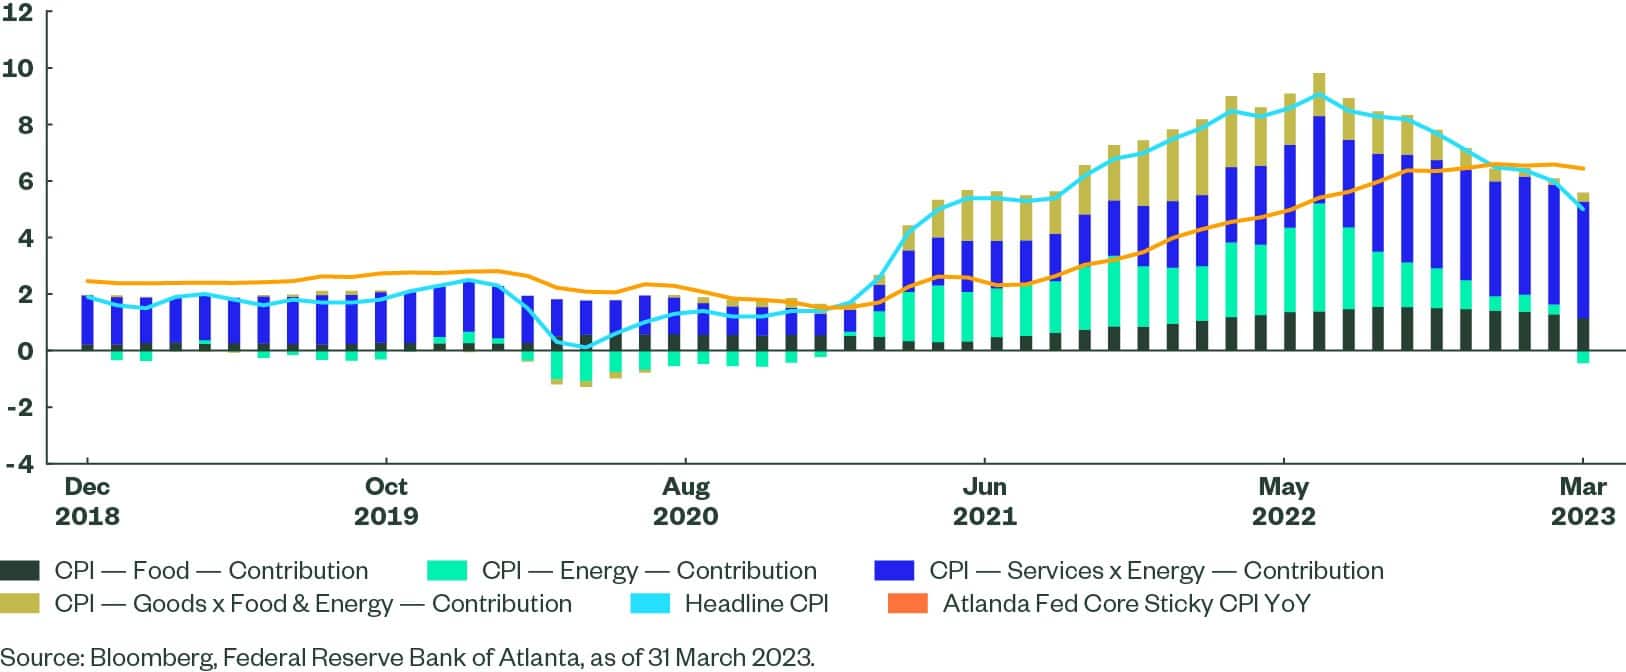 Atlanta Fed’s Core Sticky CPI and Constituents of Headline CPI